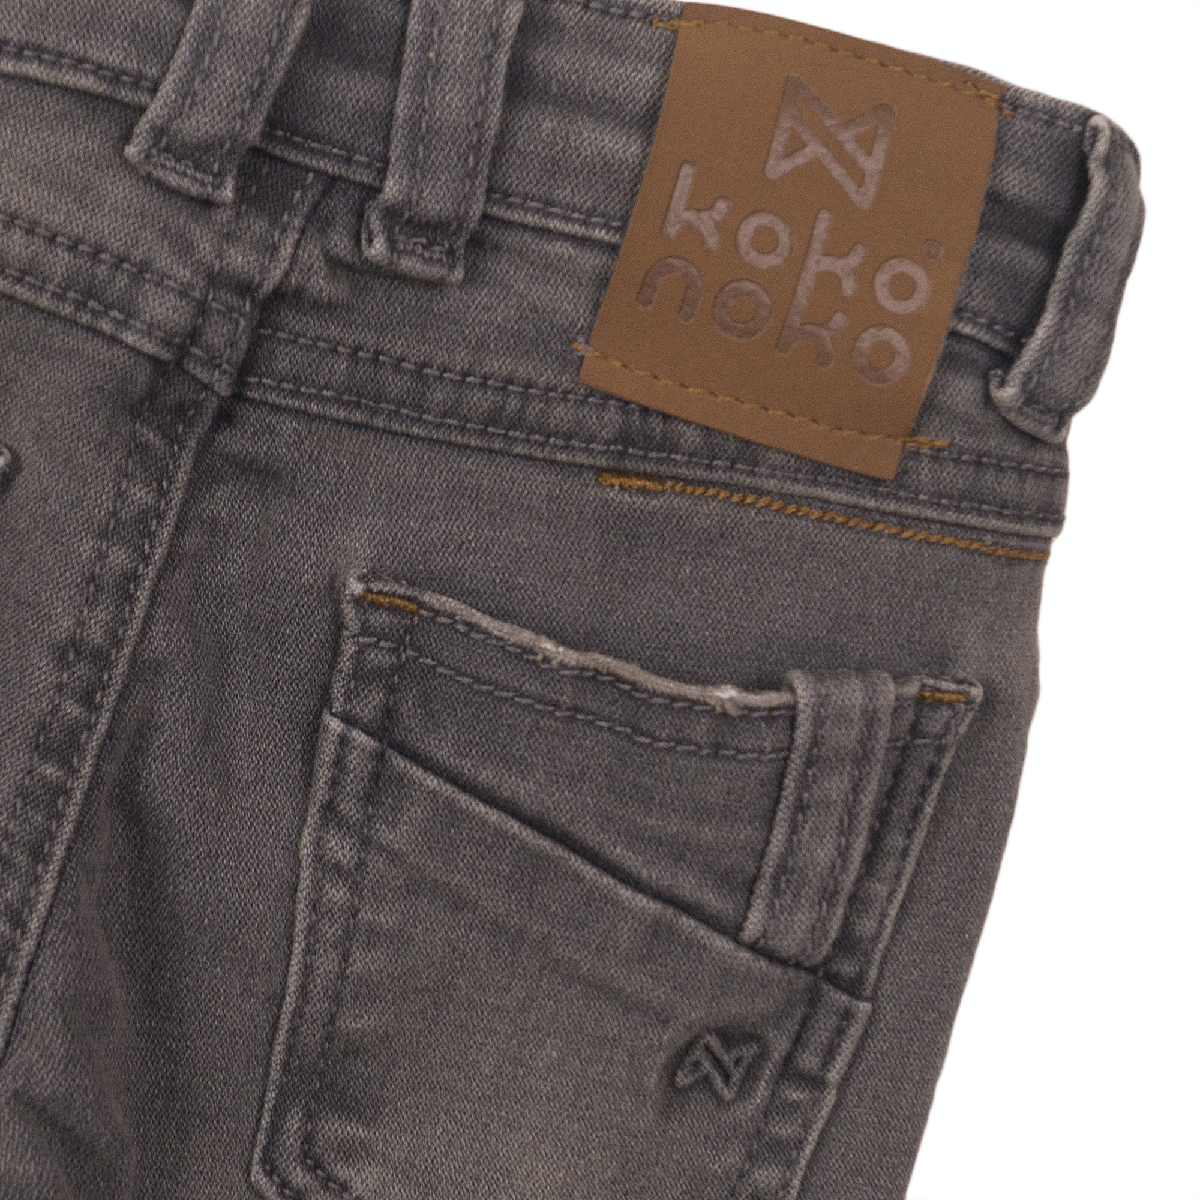 Koko Noko Jeans grey